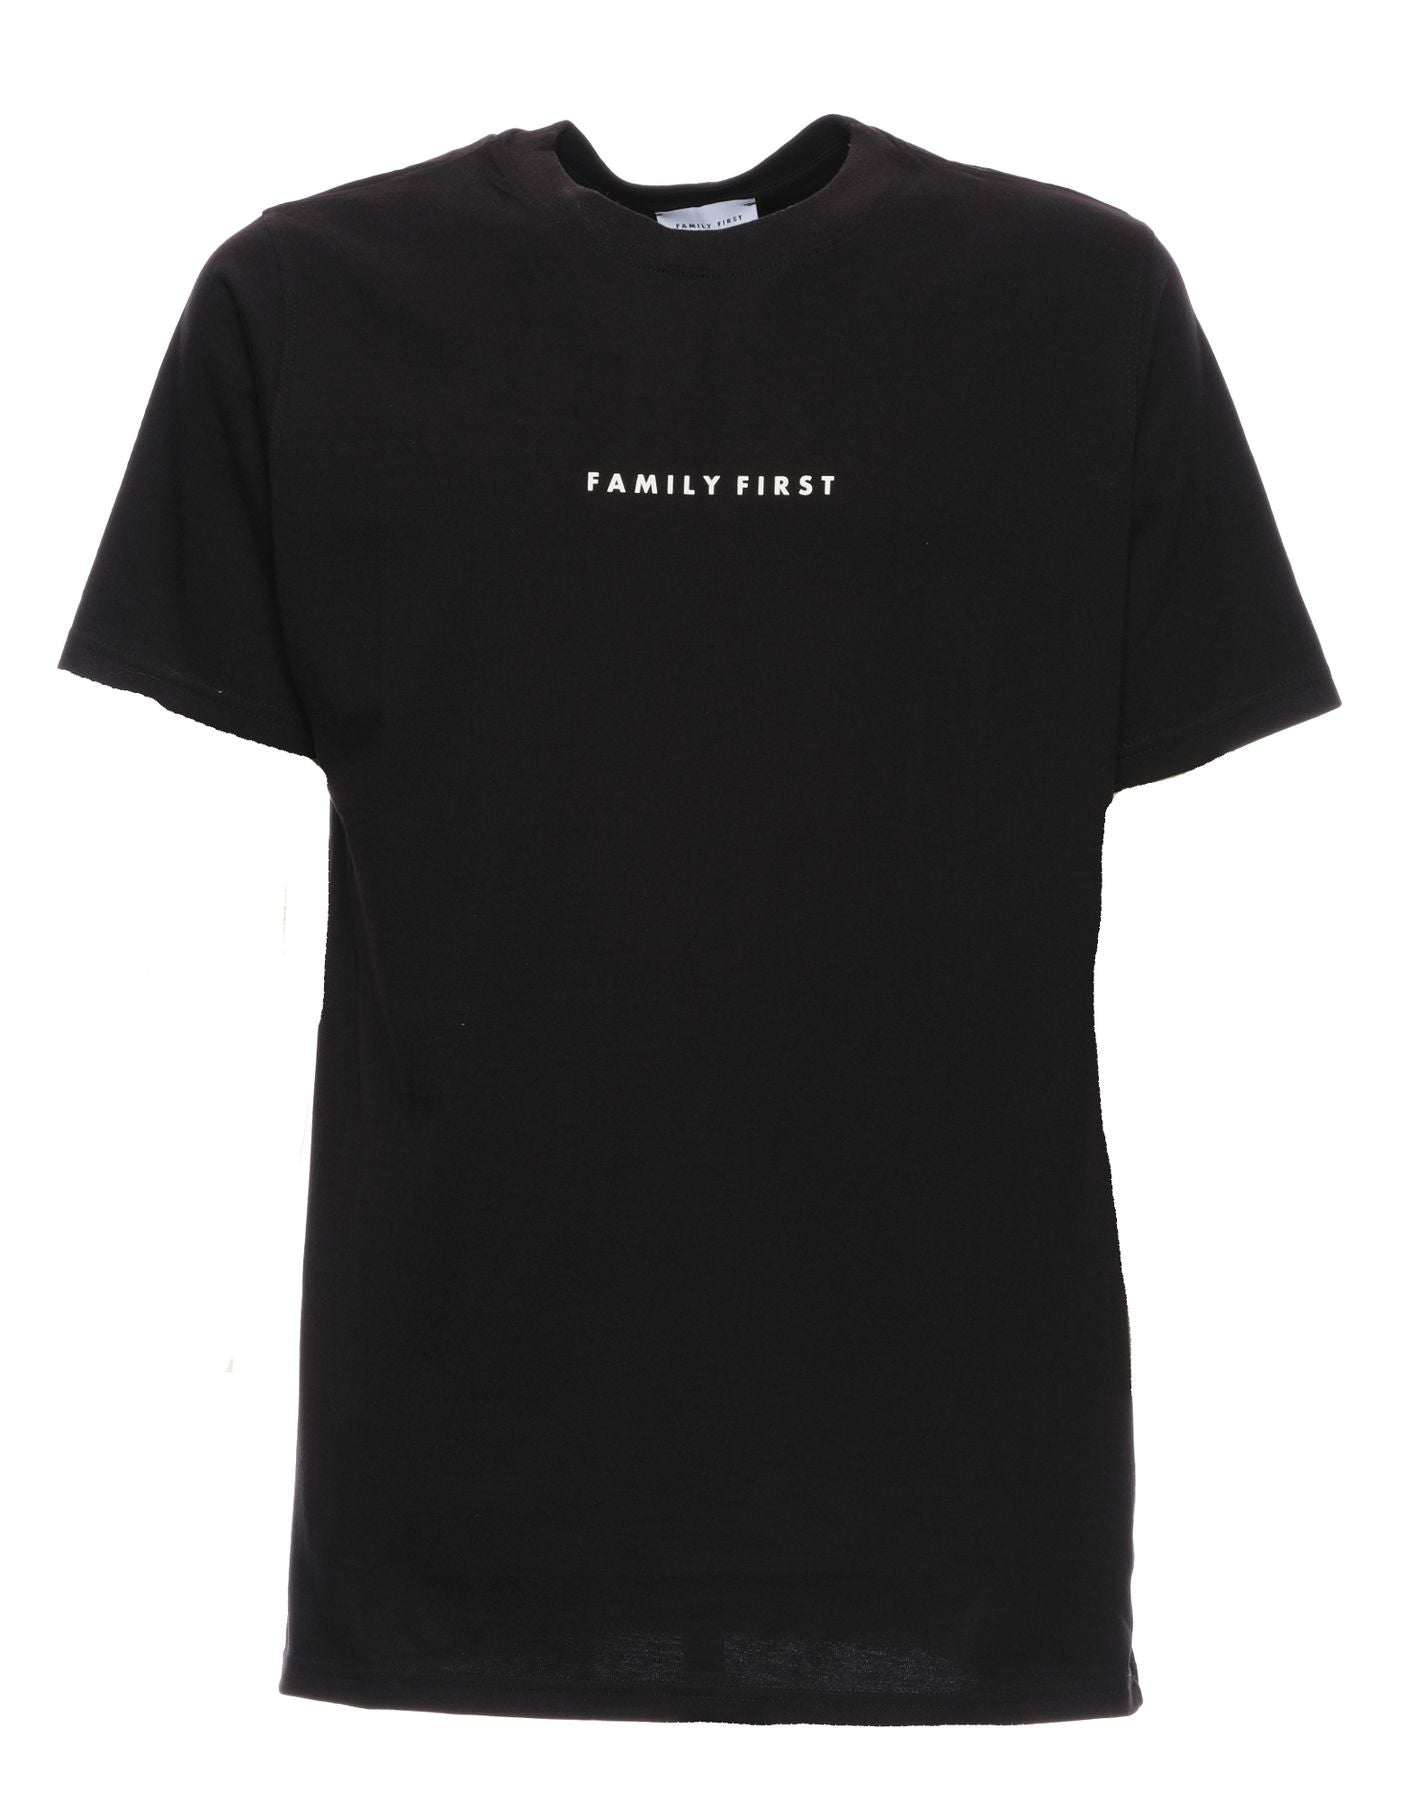 T-shirt per man box logo nero Family First